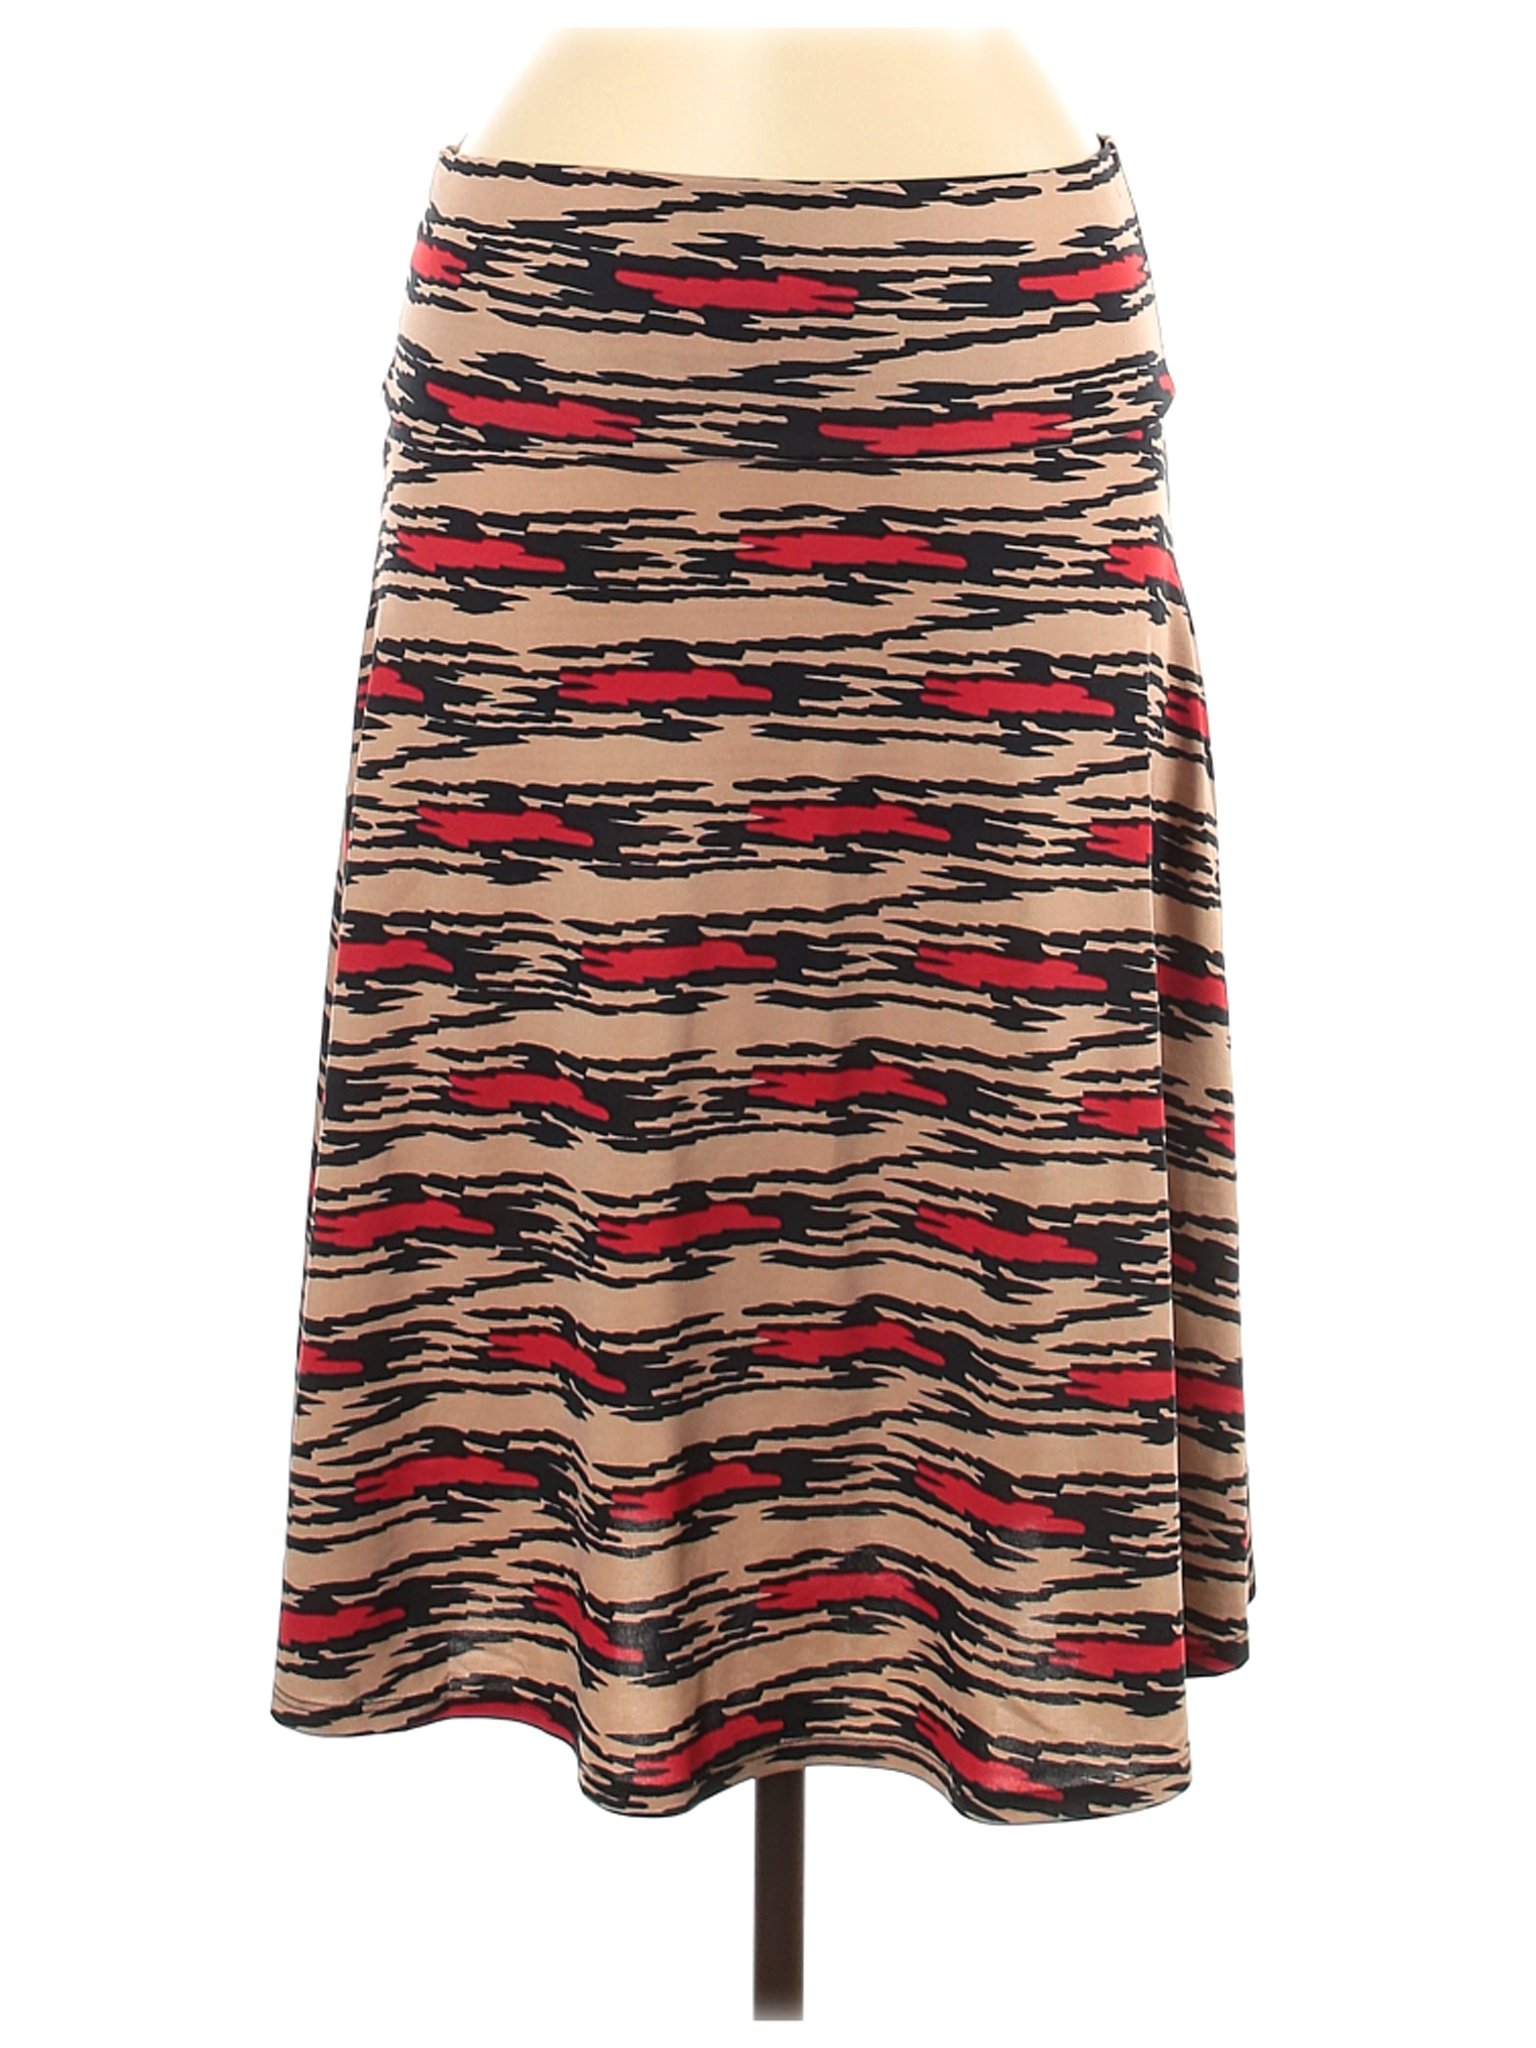 Lularoe Women Brown Casual Skirt M | eBay